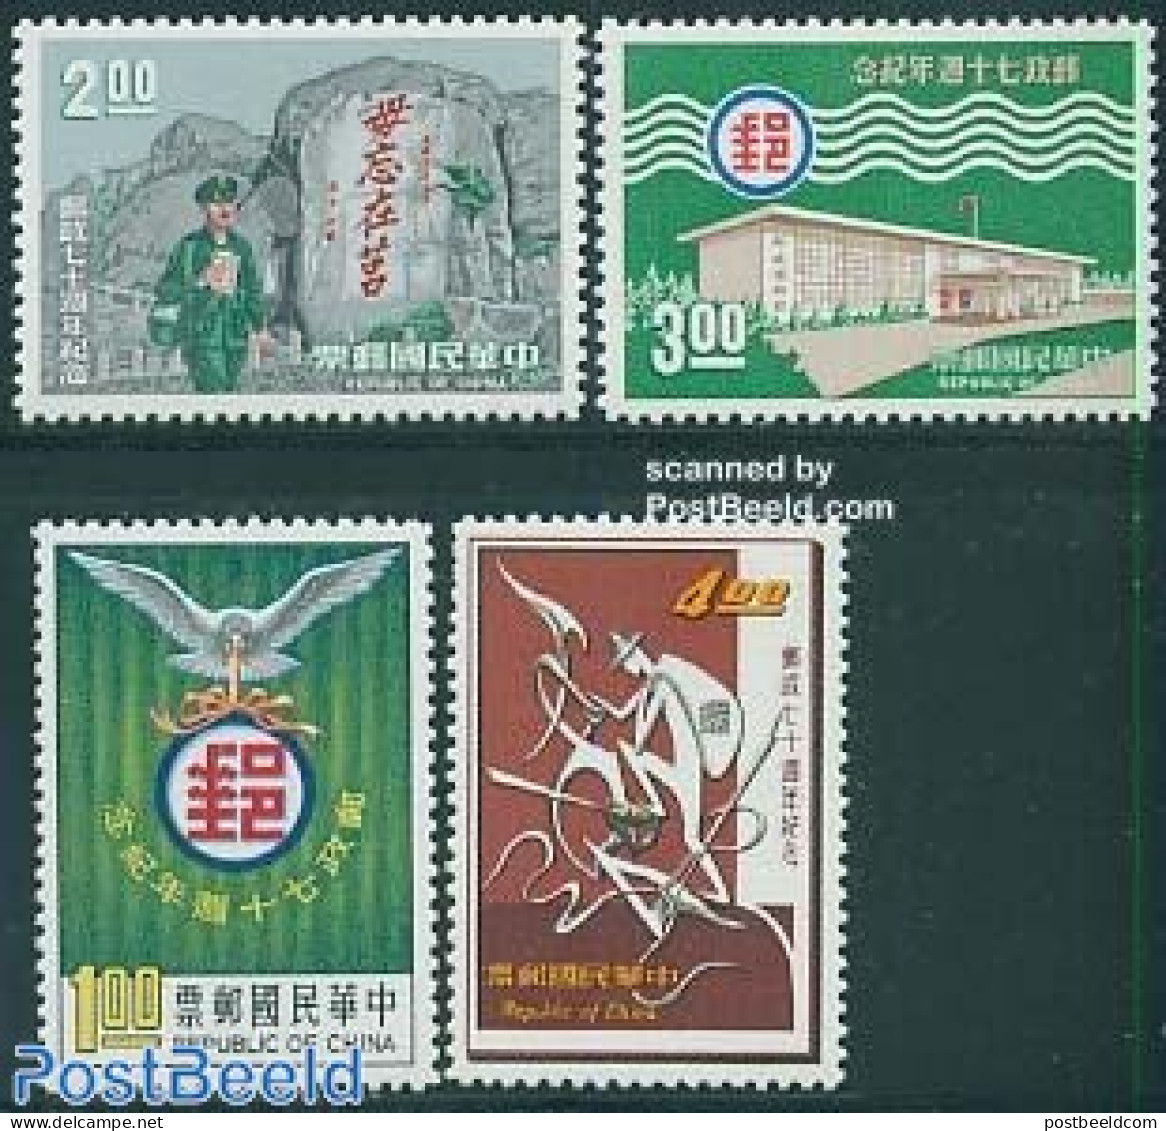 Taiwan 1966 Postal Service 4v, Mint NH, Post - Correo Postal